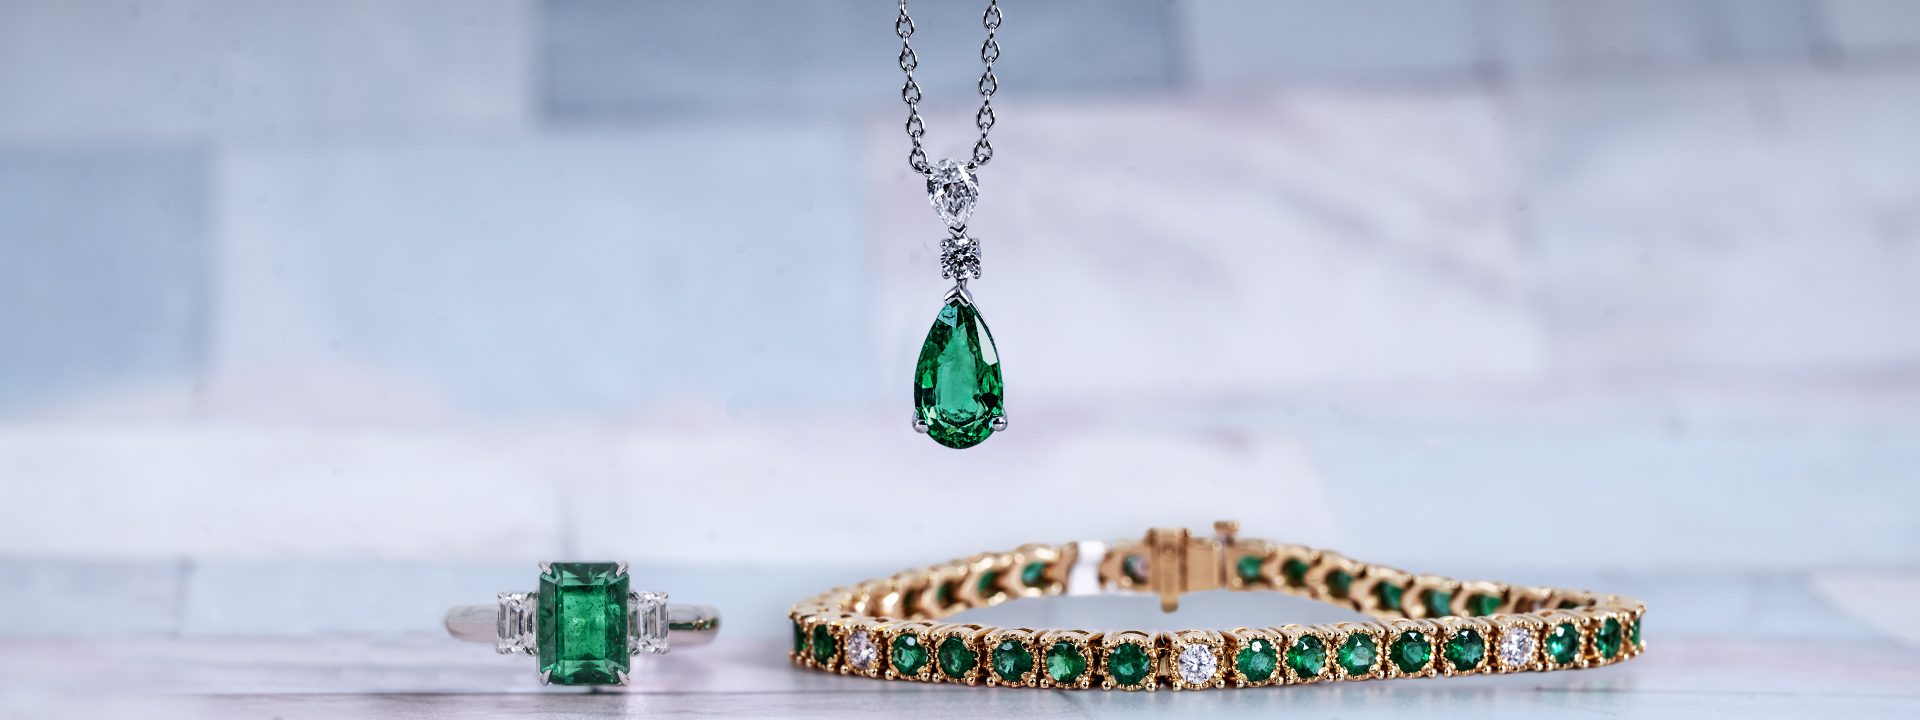 Emerald Jewelry Banner